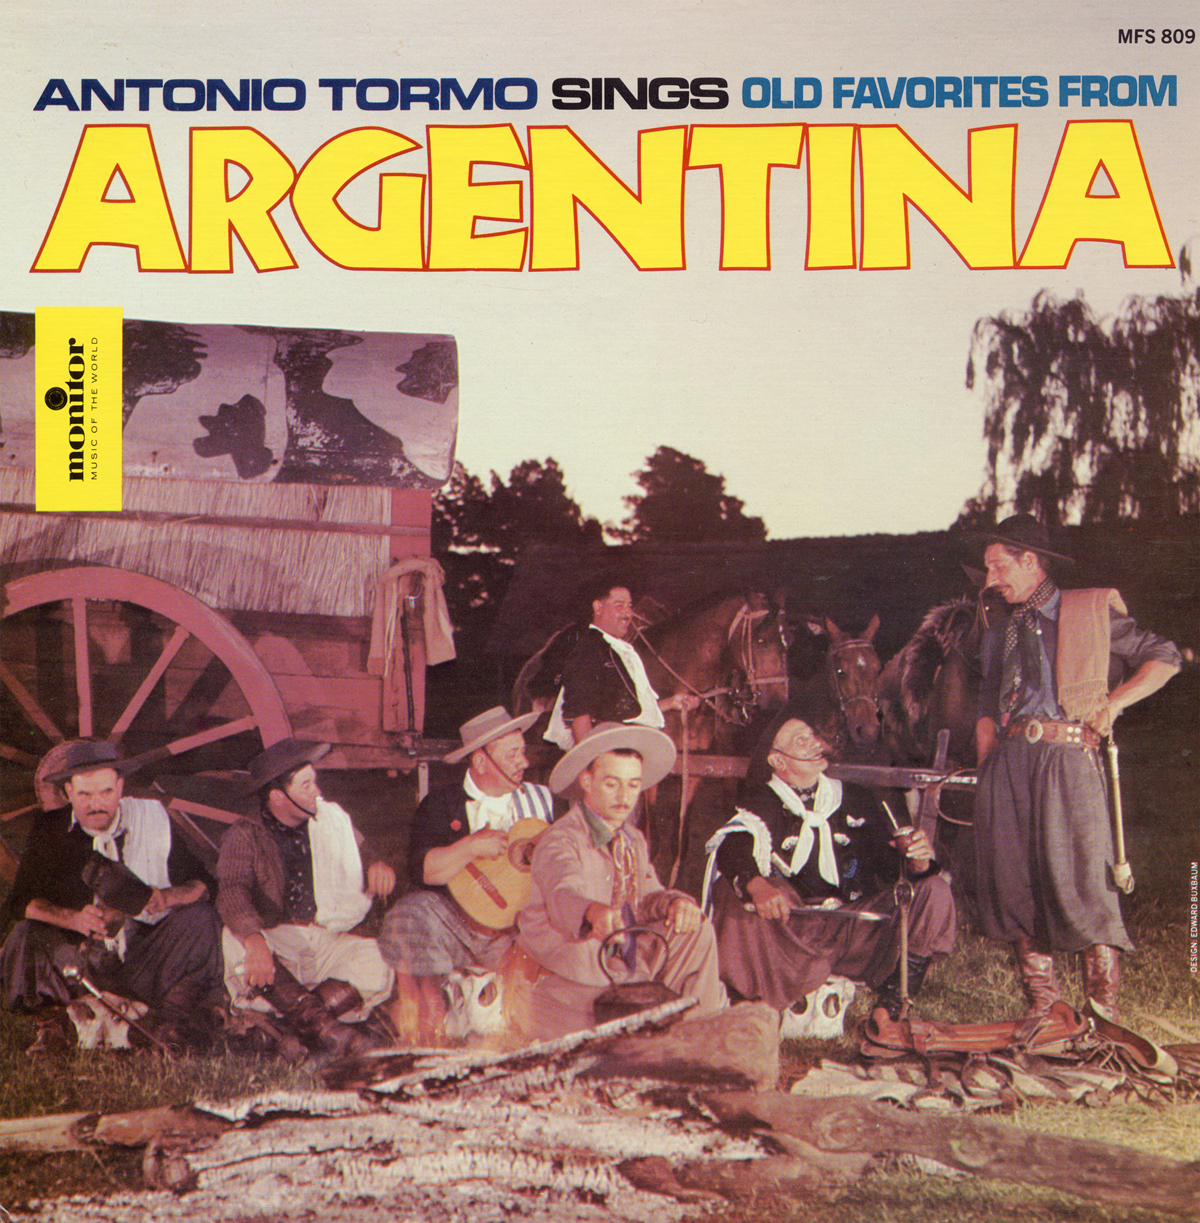 ANTONIO TORMO SINGS OLD FAVORITES FROM ARGENTINA